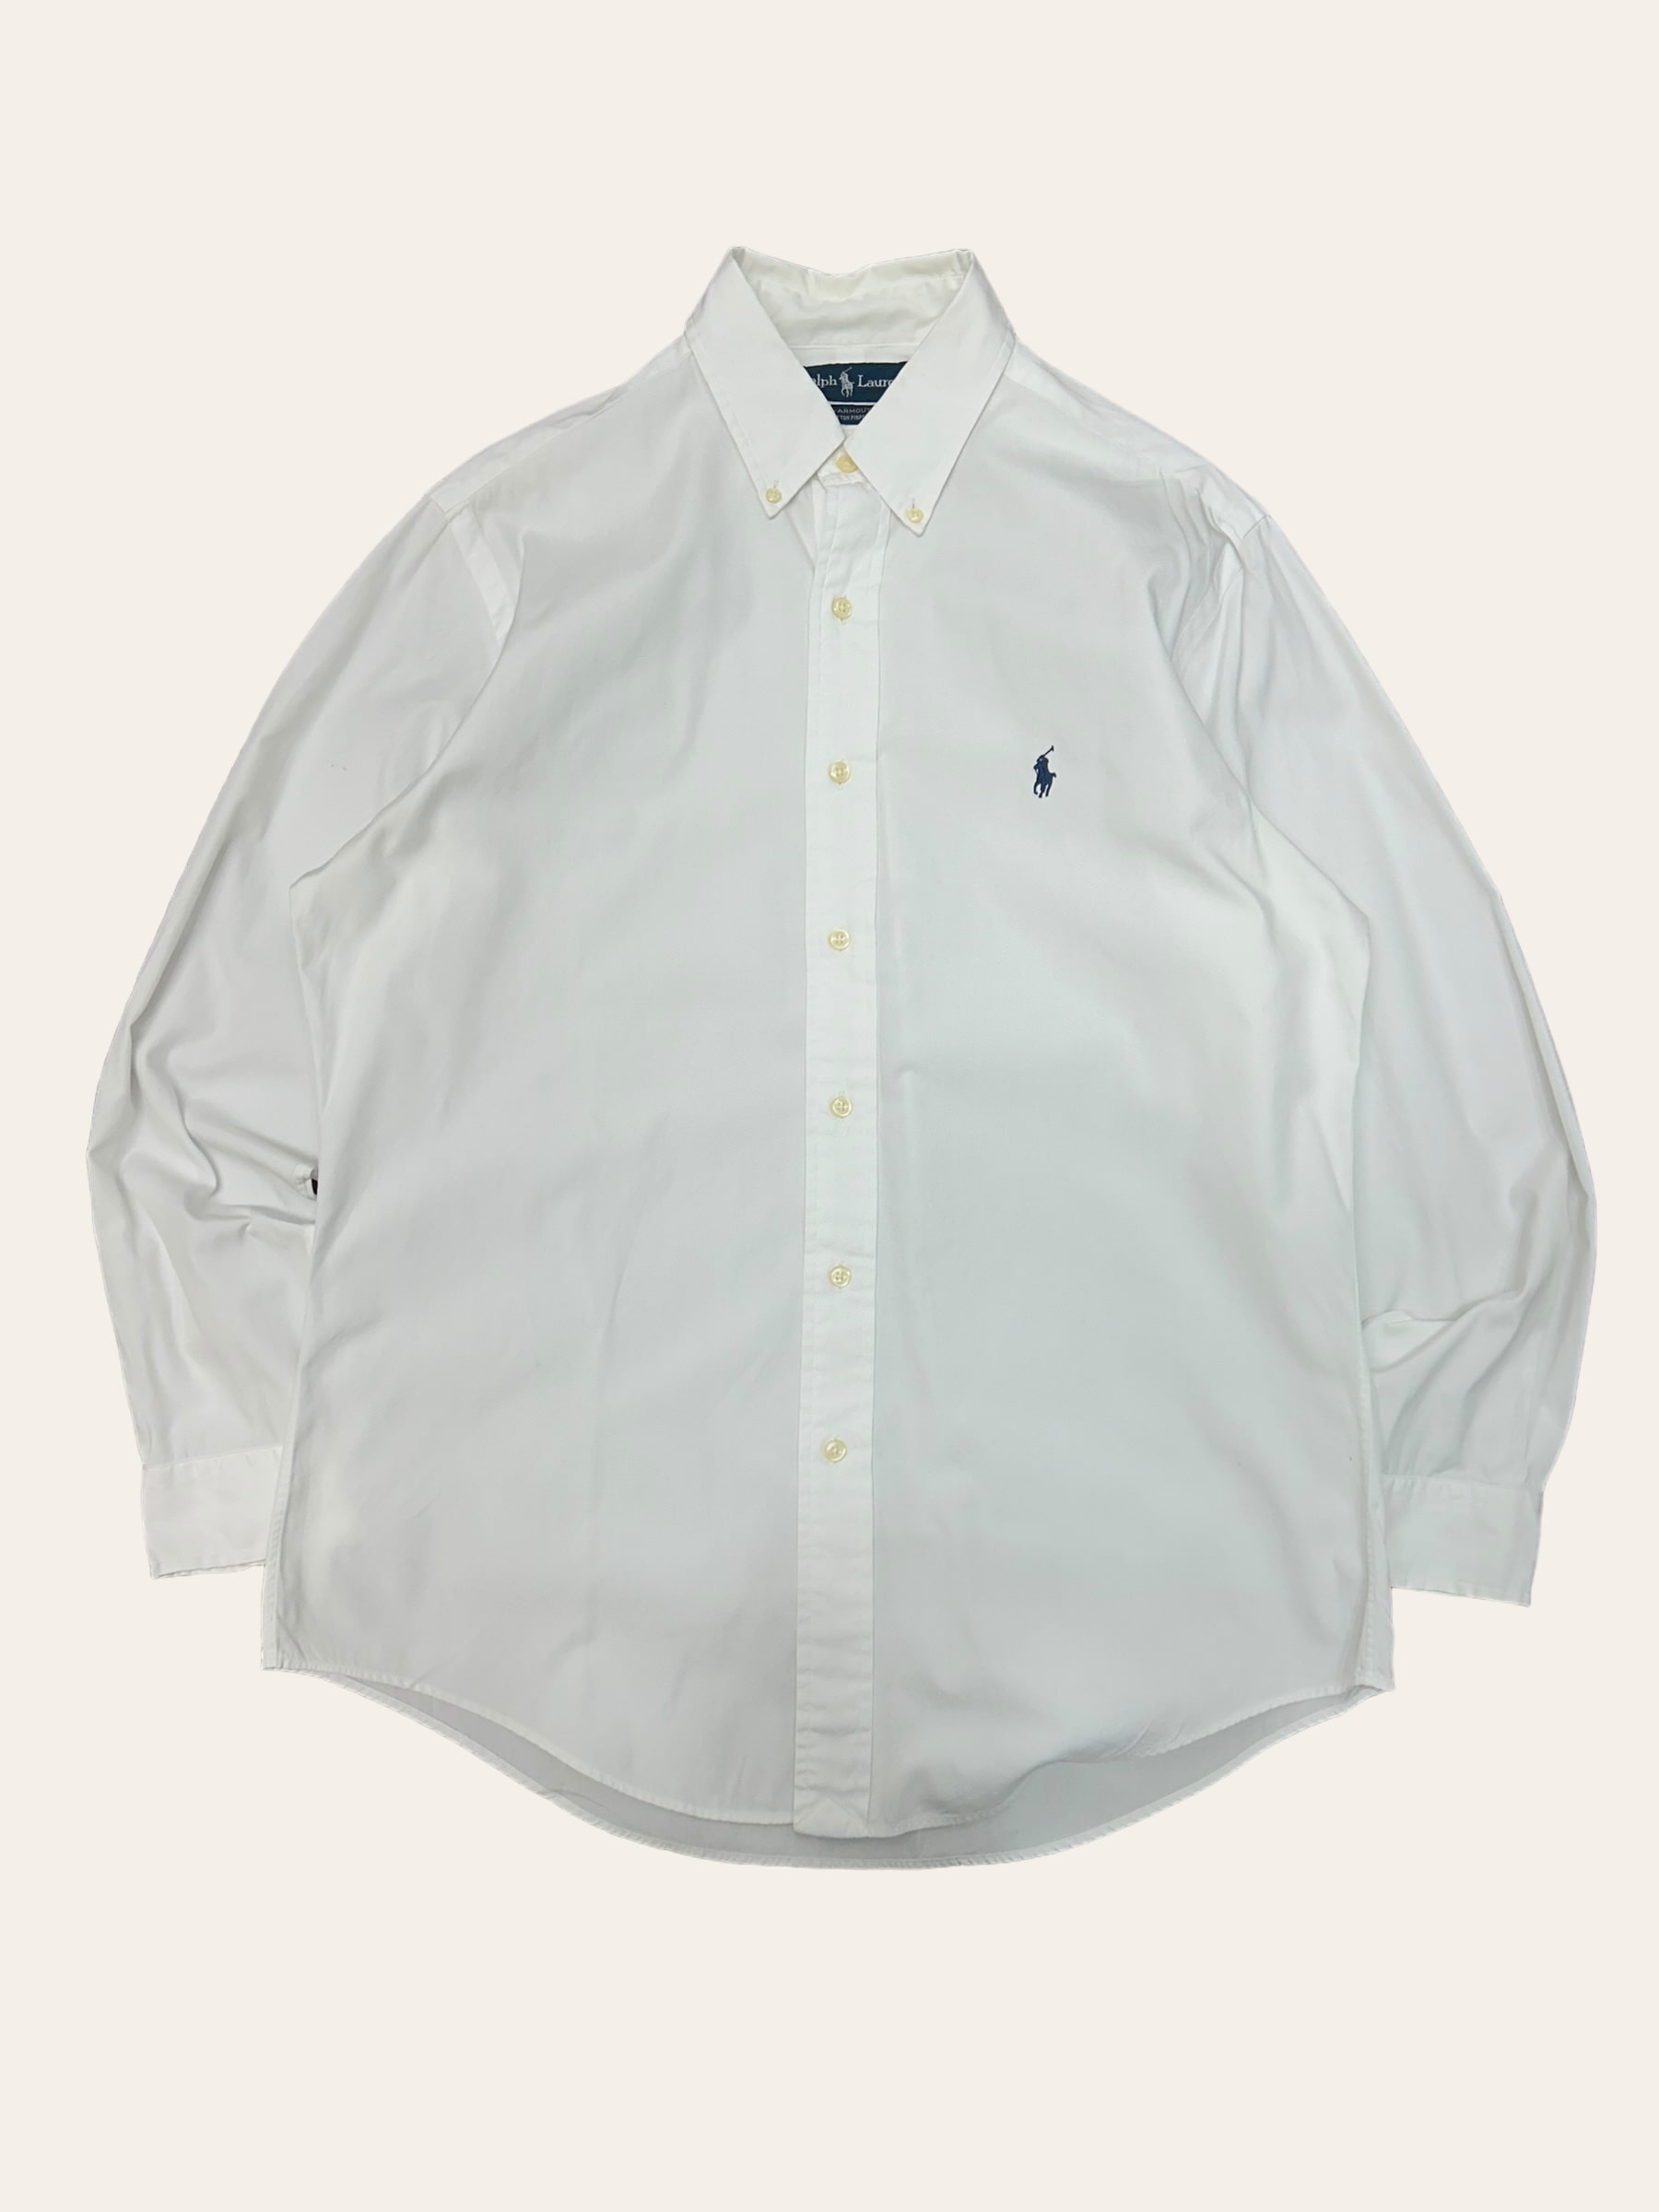 Polo ralph lauren white poplin shirt 41